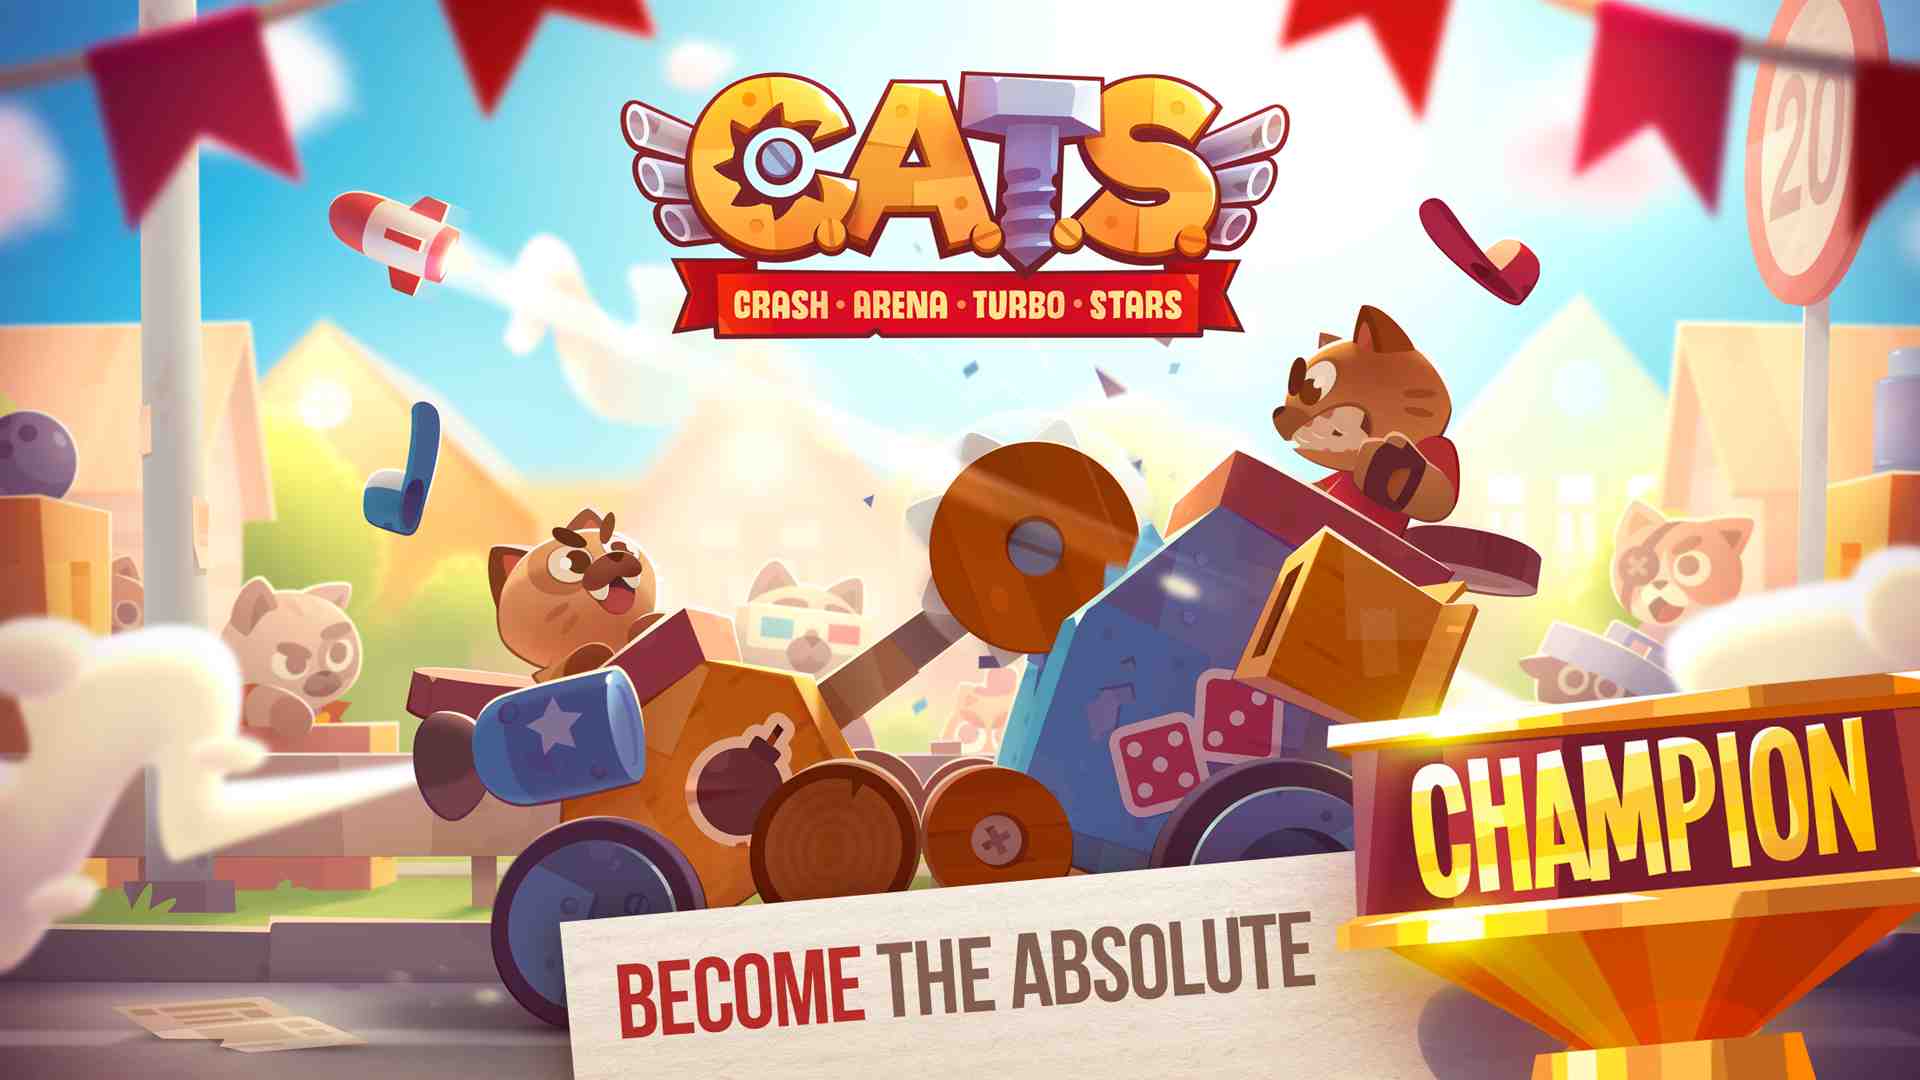 CATS: Crash Arena Turbo Stars MOD APK